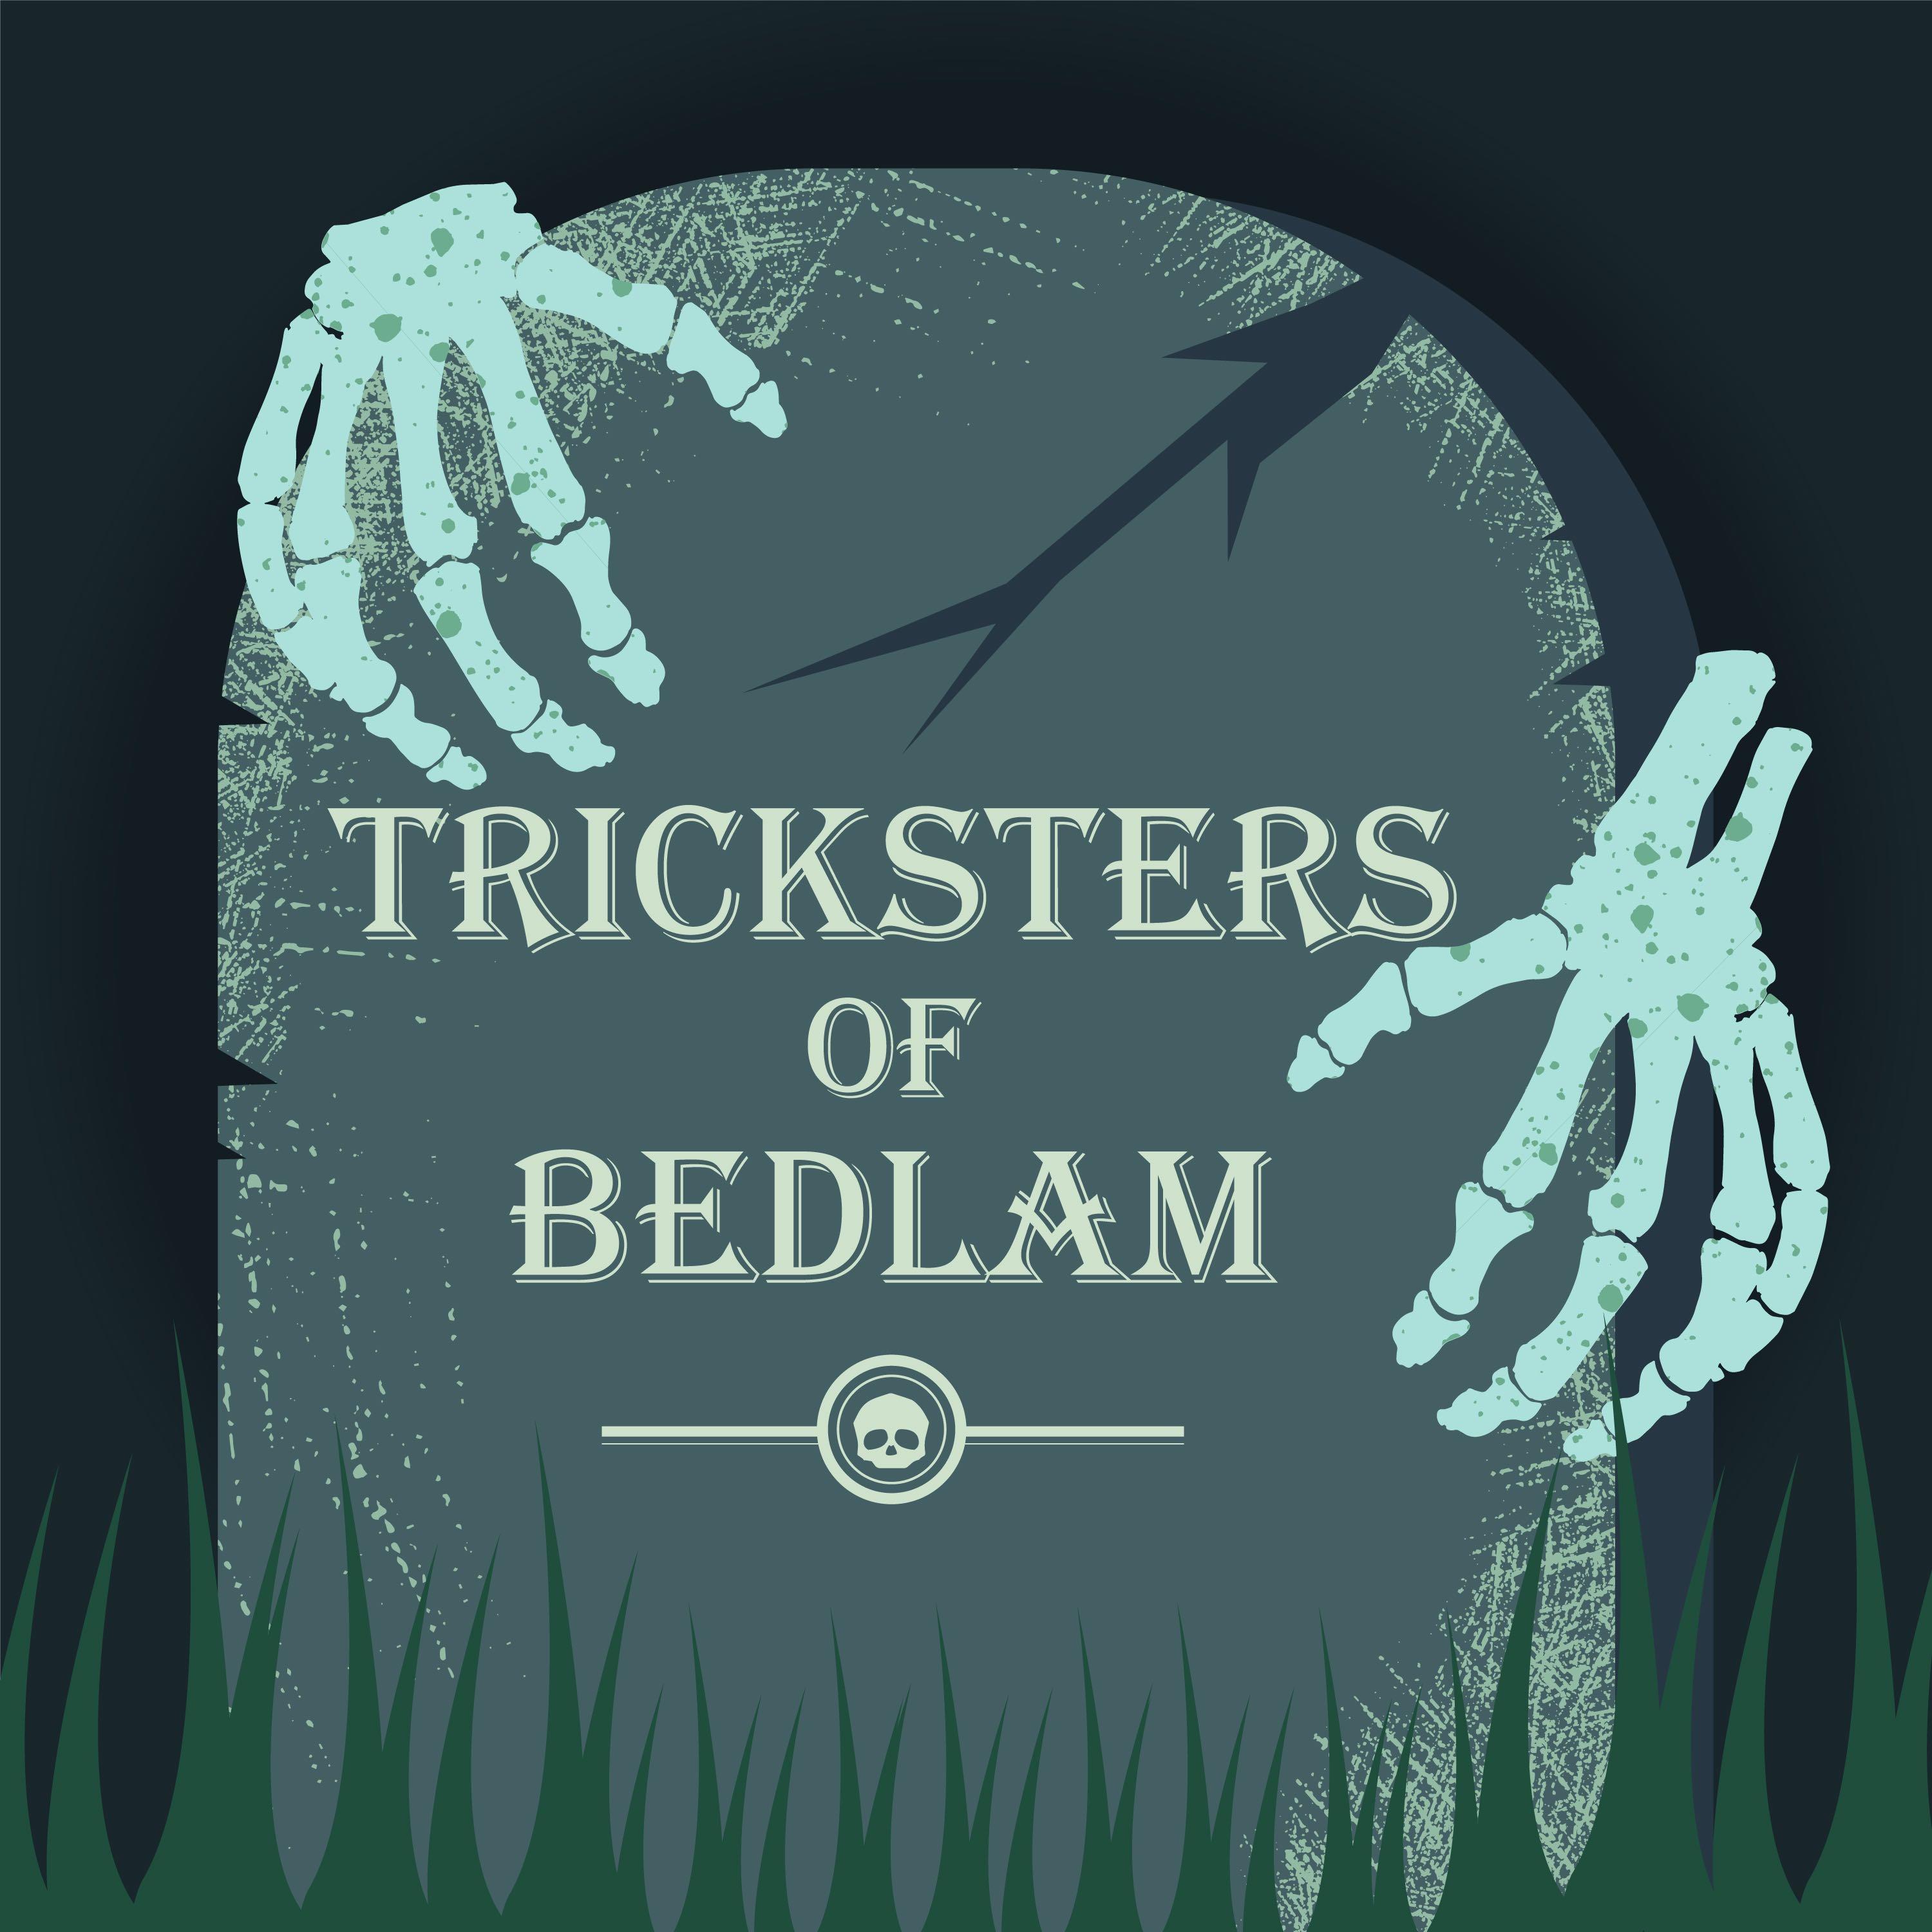 Tricksters of Bedlam